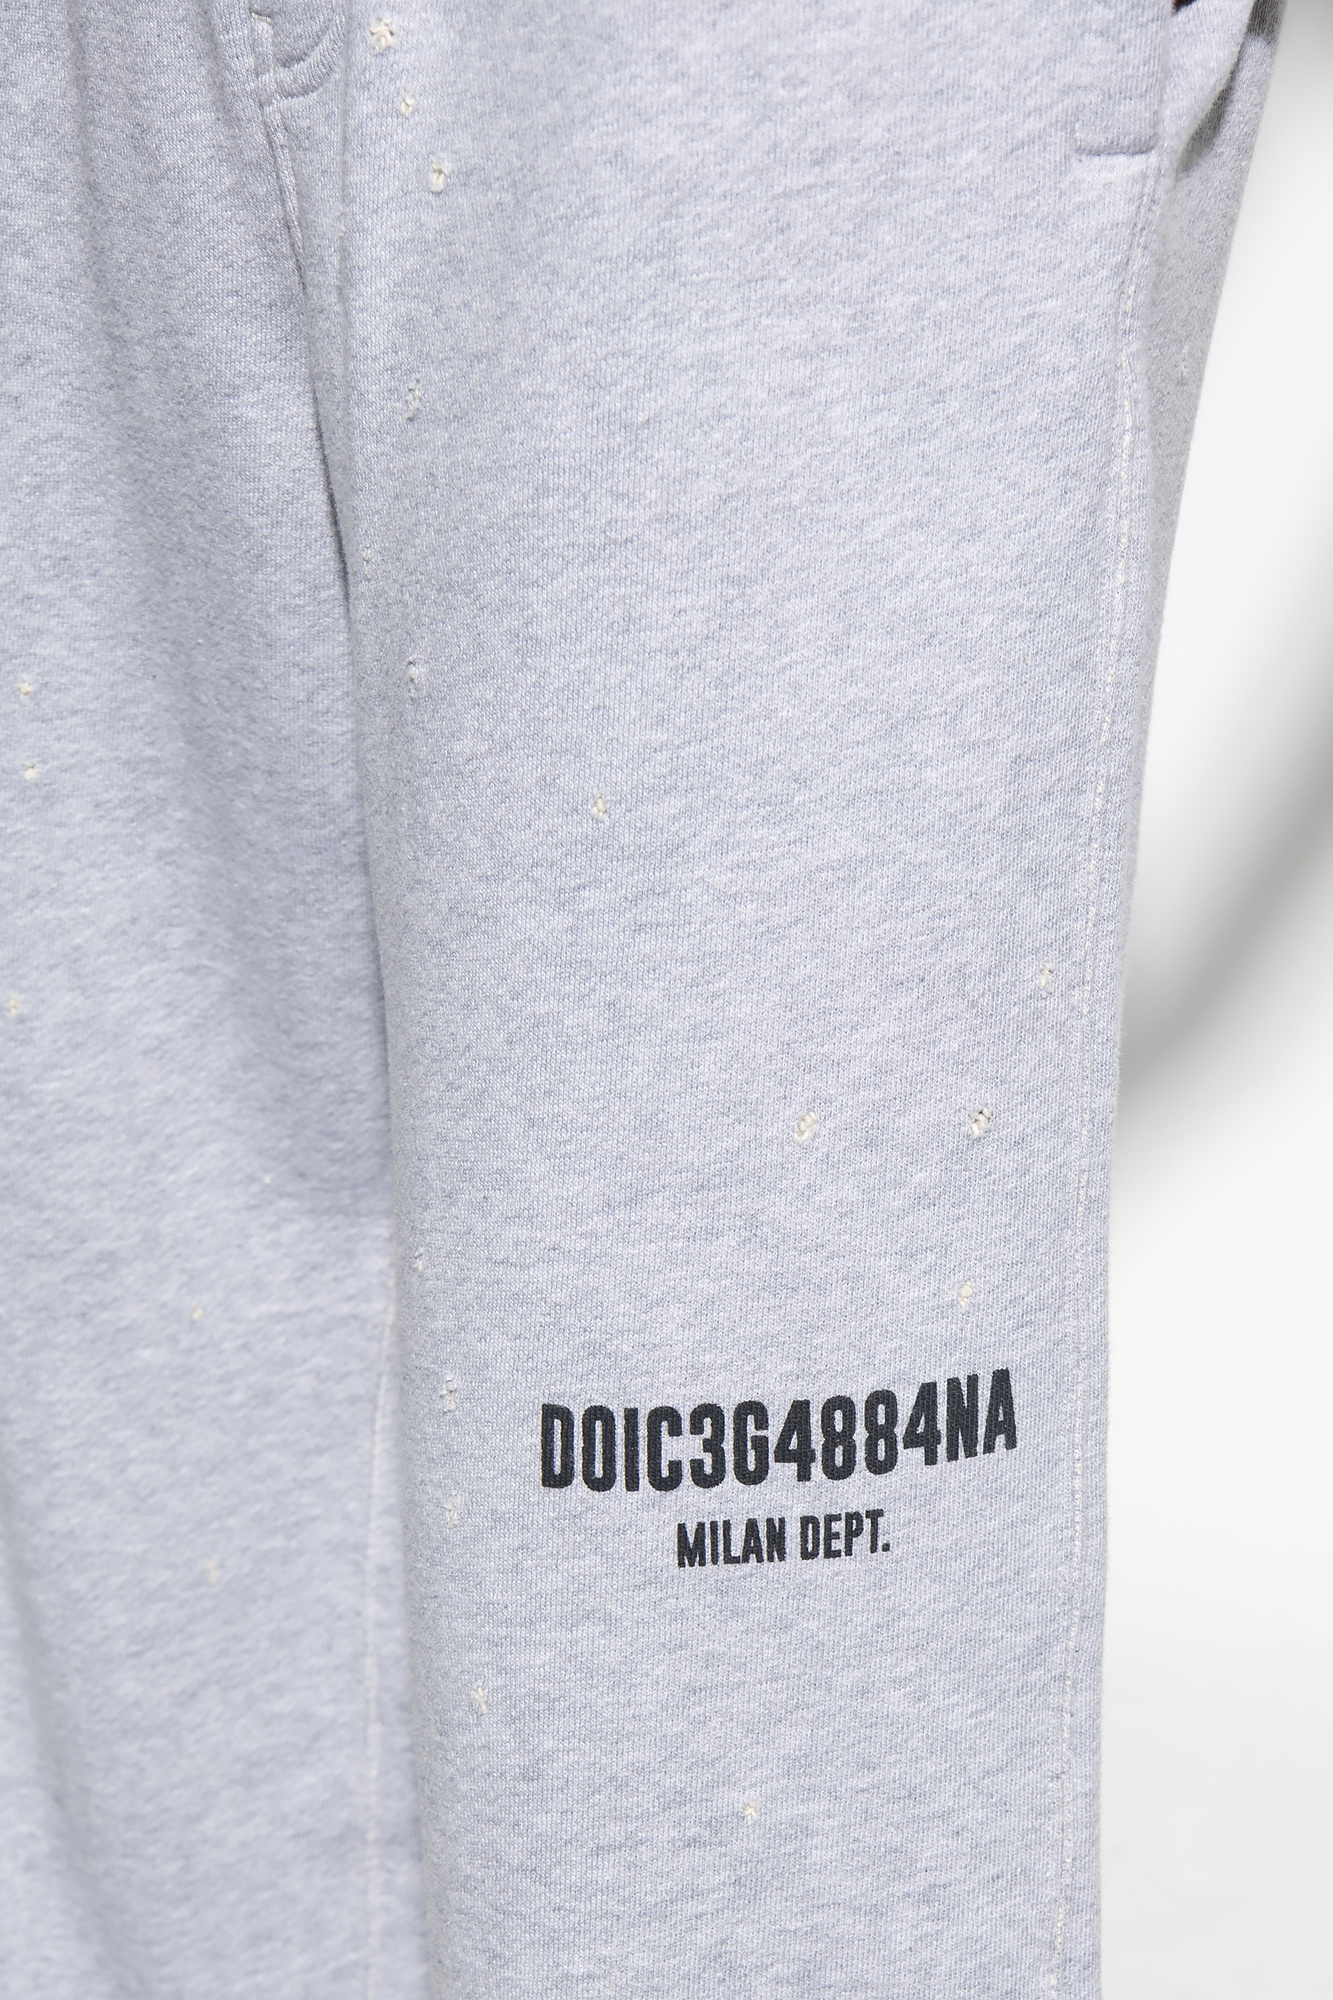 dolce lined & Gabbana Printed sweatpants